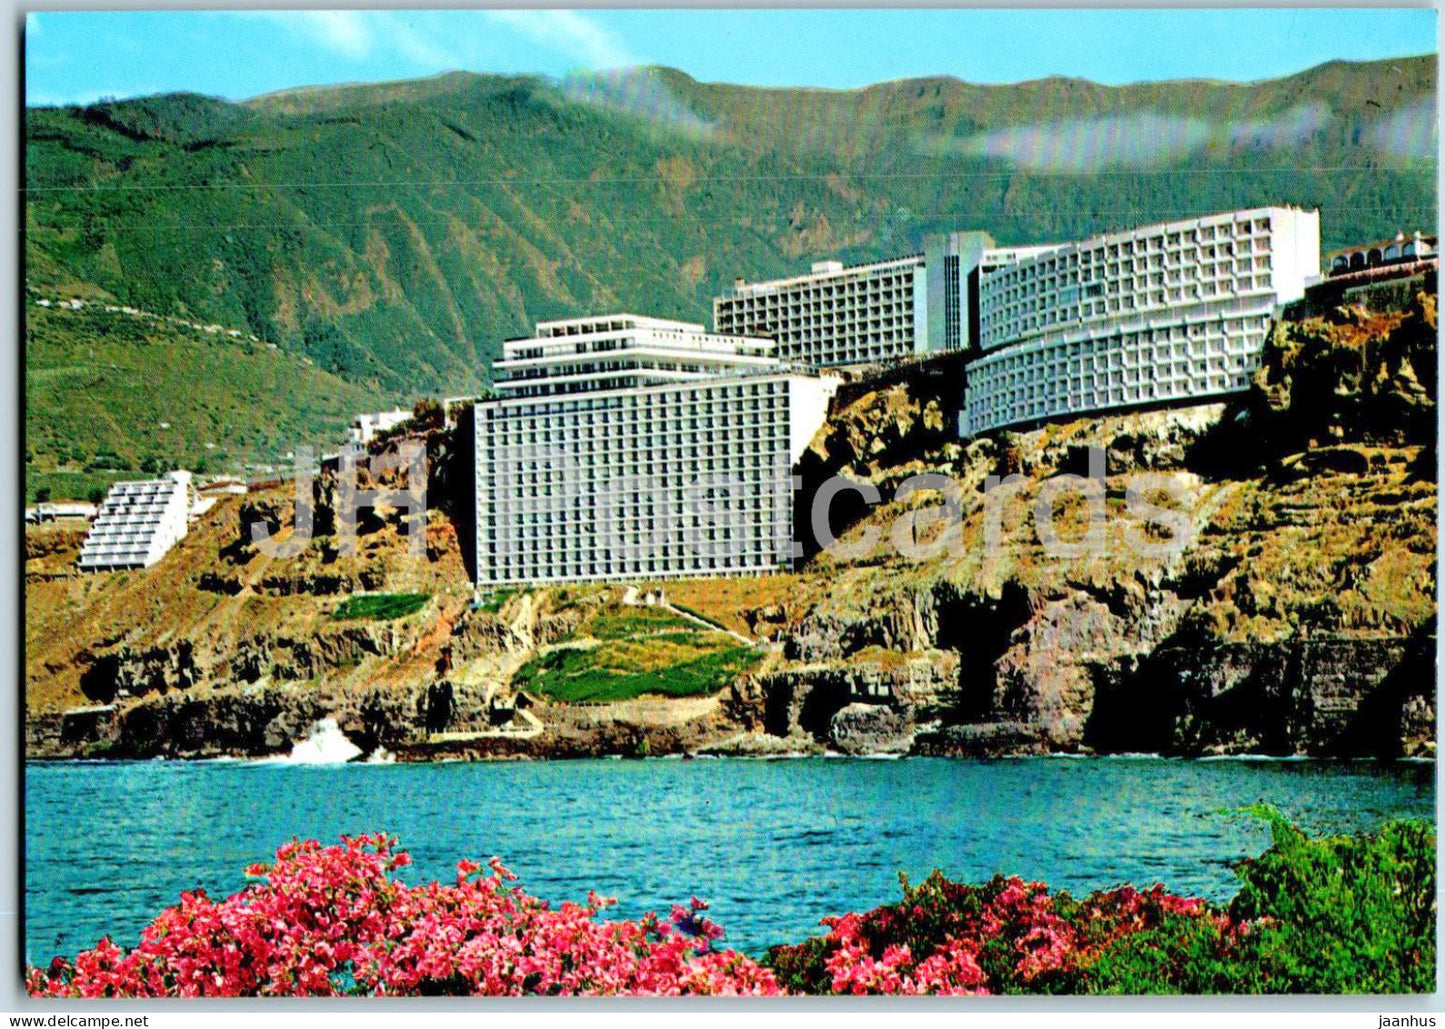 Puerto de la Cruz - Tenerife - Modern Hotel Installations in the Coast - 51 - Spain - unused - JH Postcards